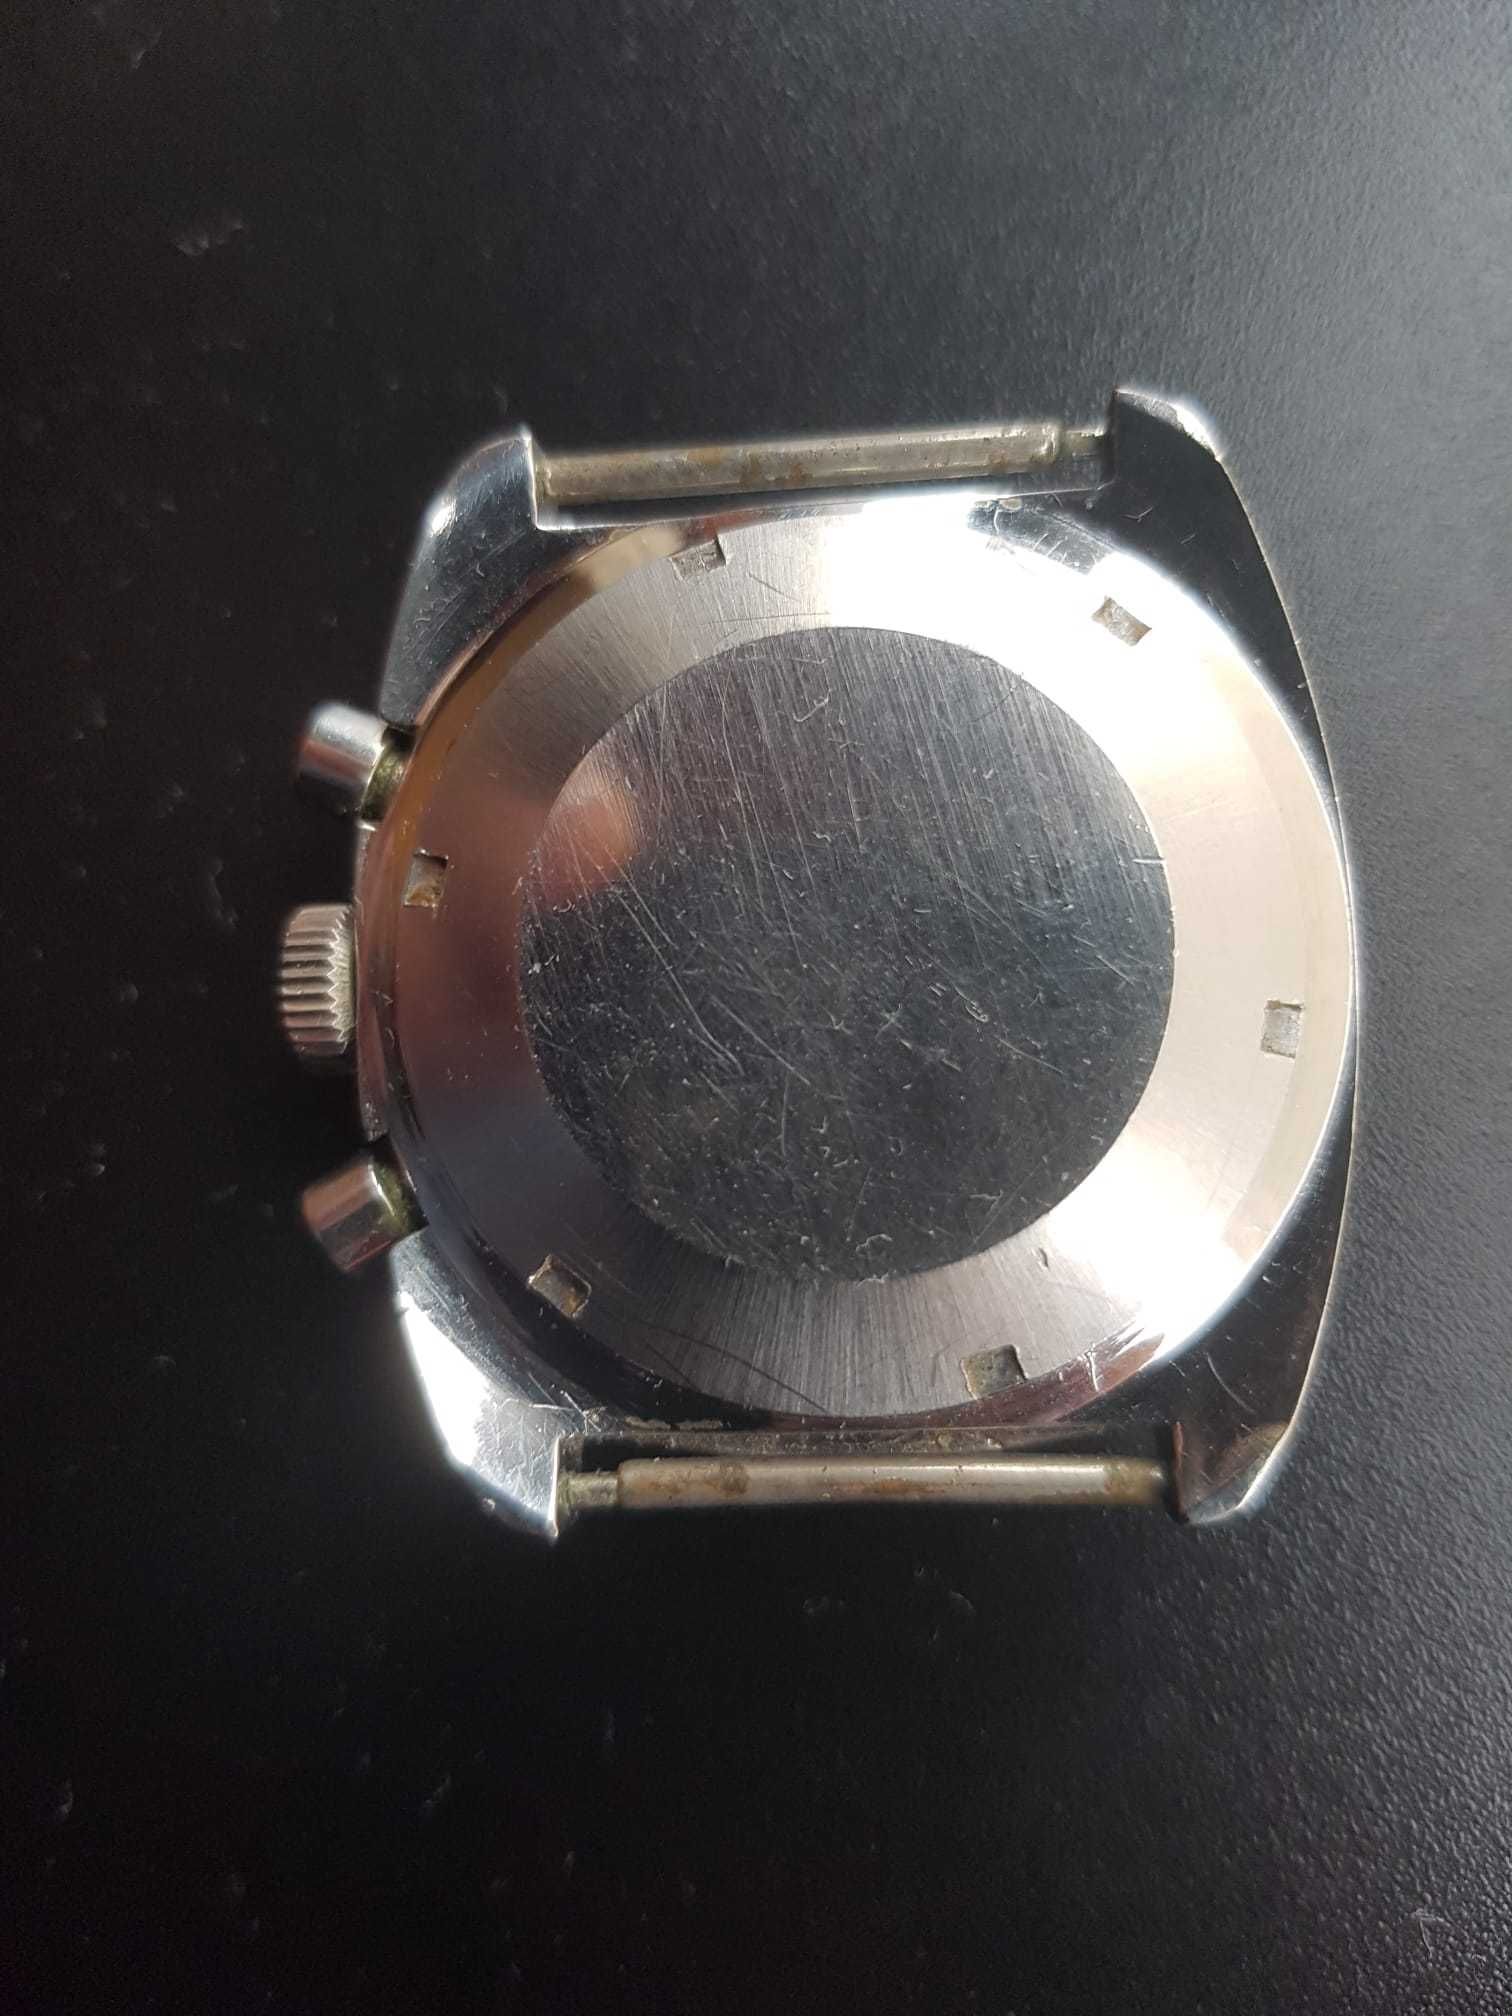 Tissot cronografo lemania 1970